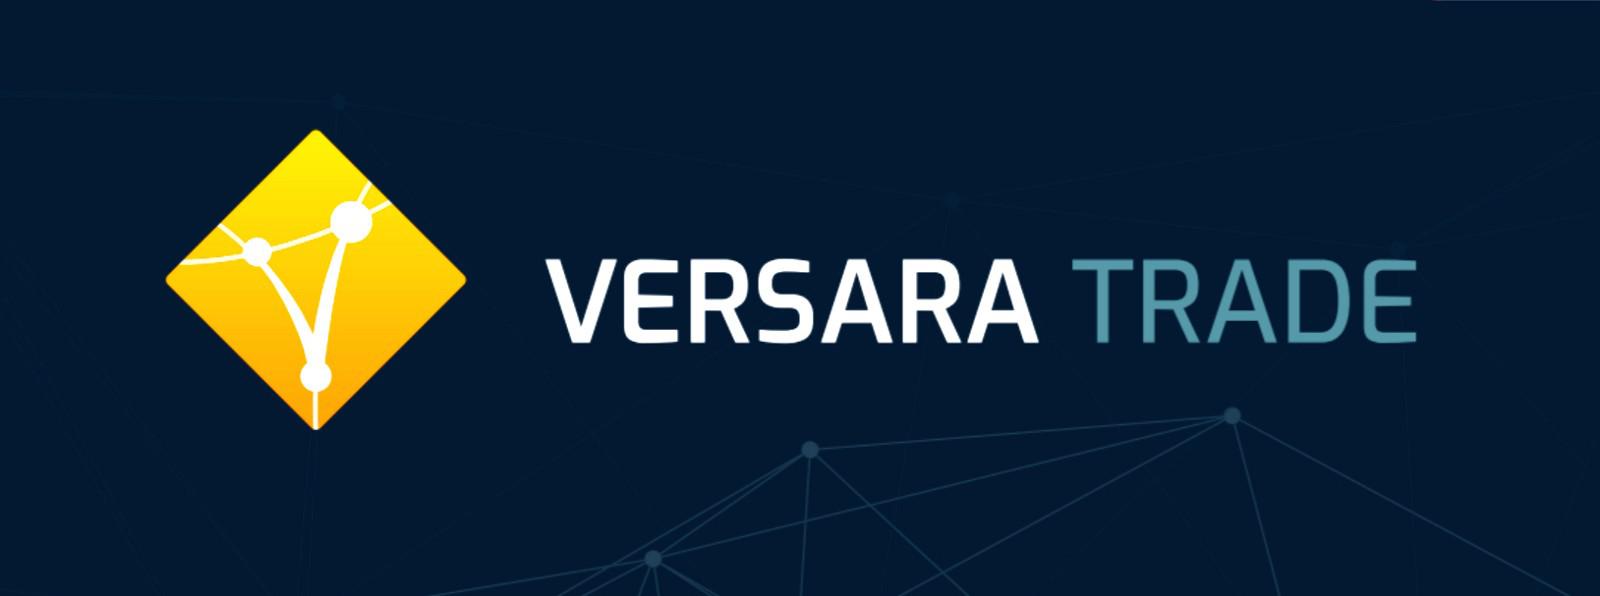 Versara Trade Brings Blockchain into the Trade Finance Market